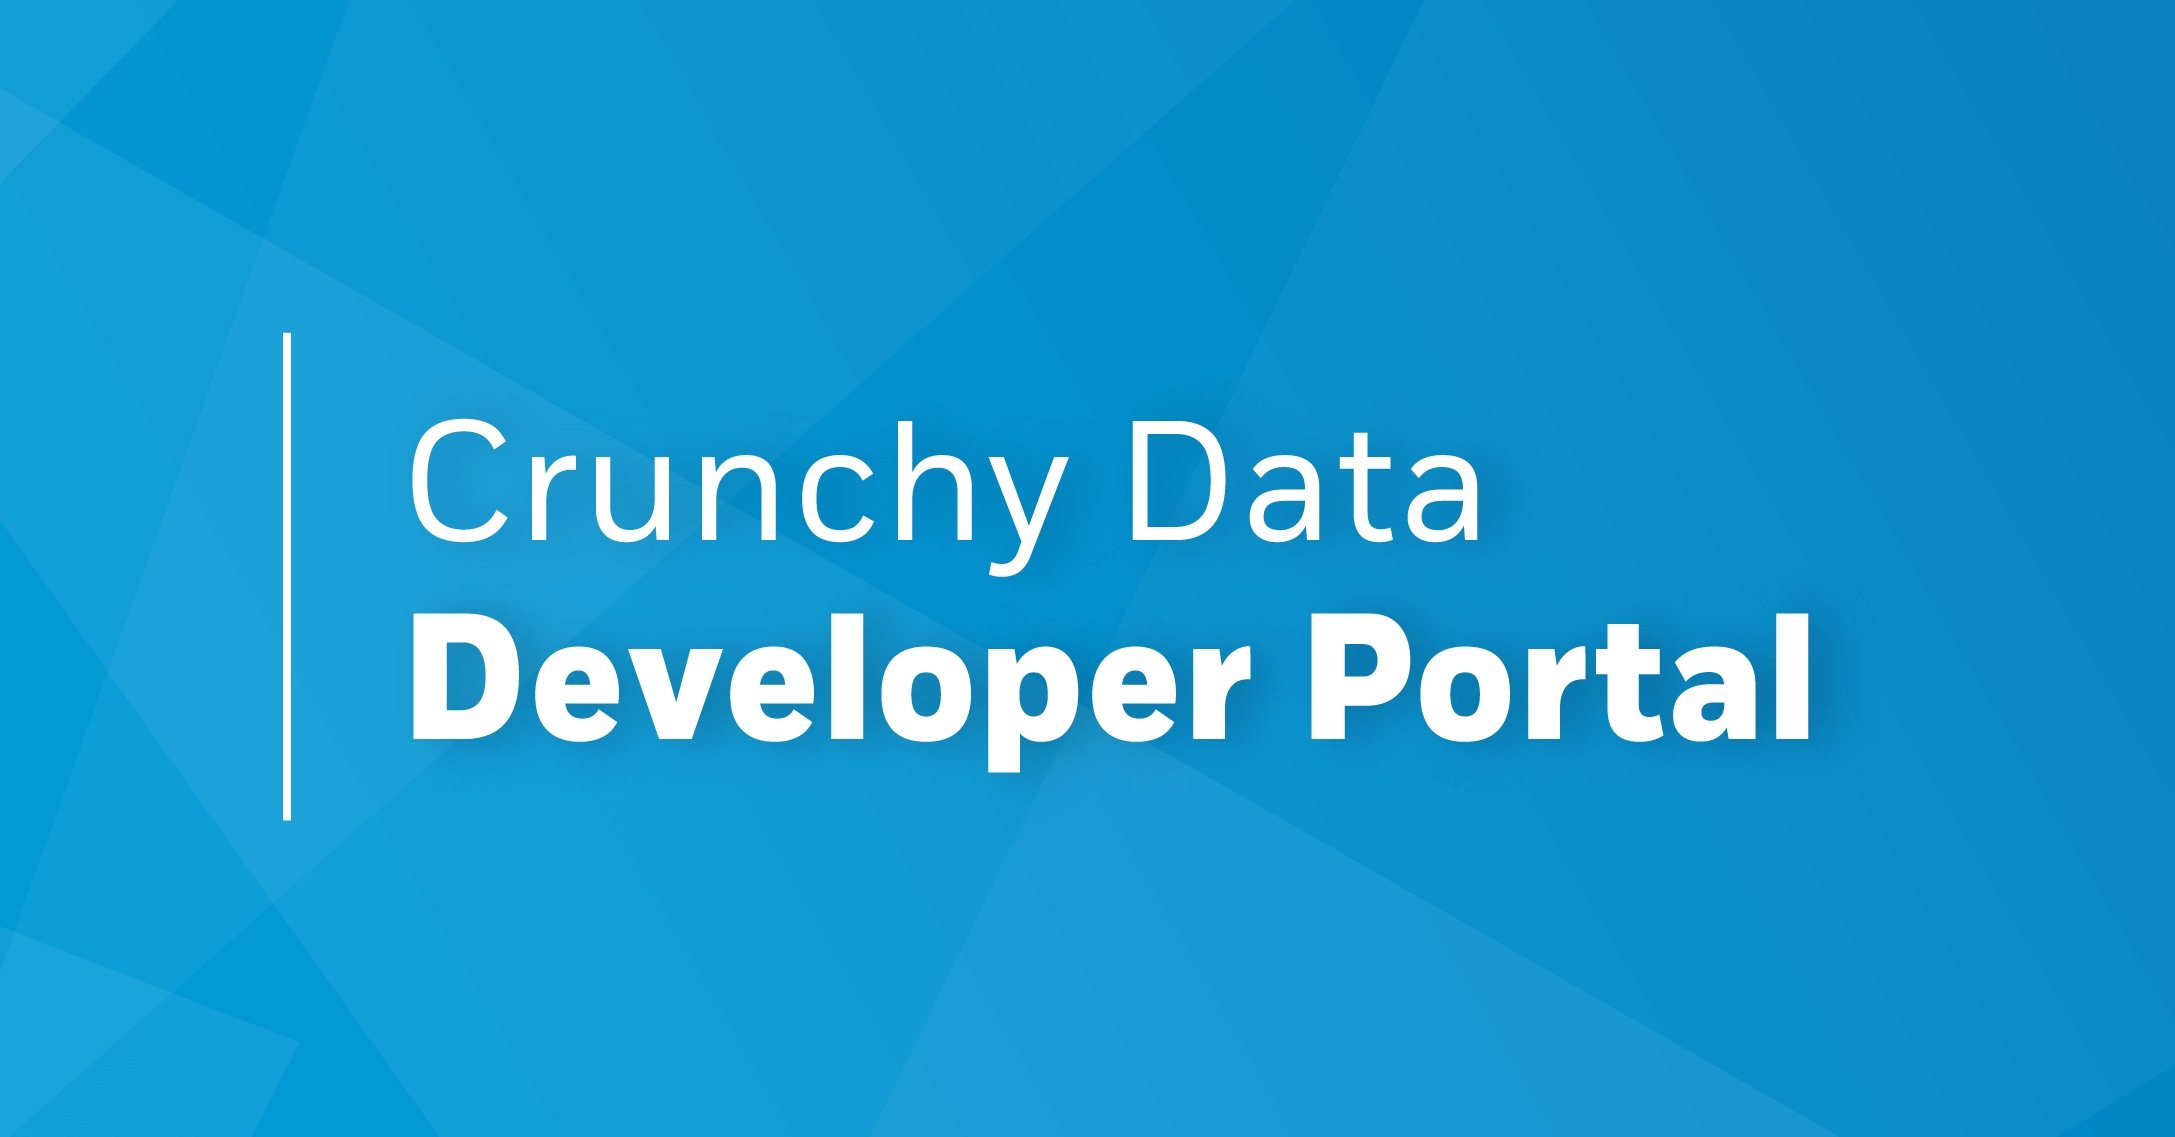 Announcing the Crunchy Data Developer Portal